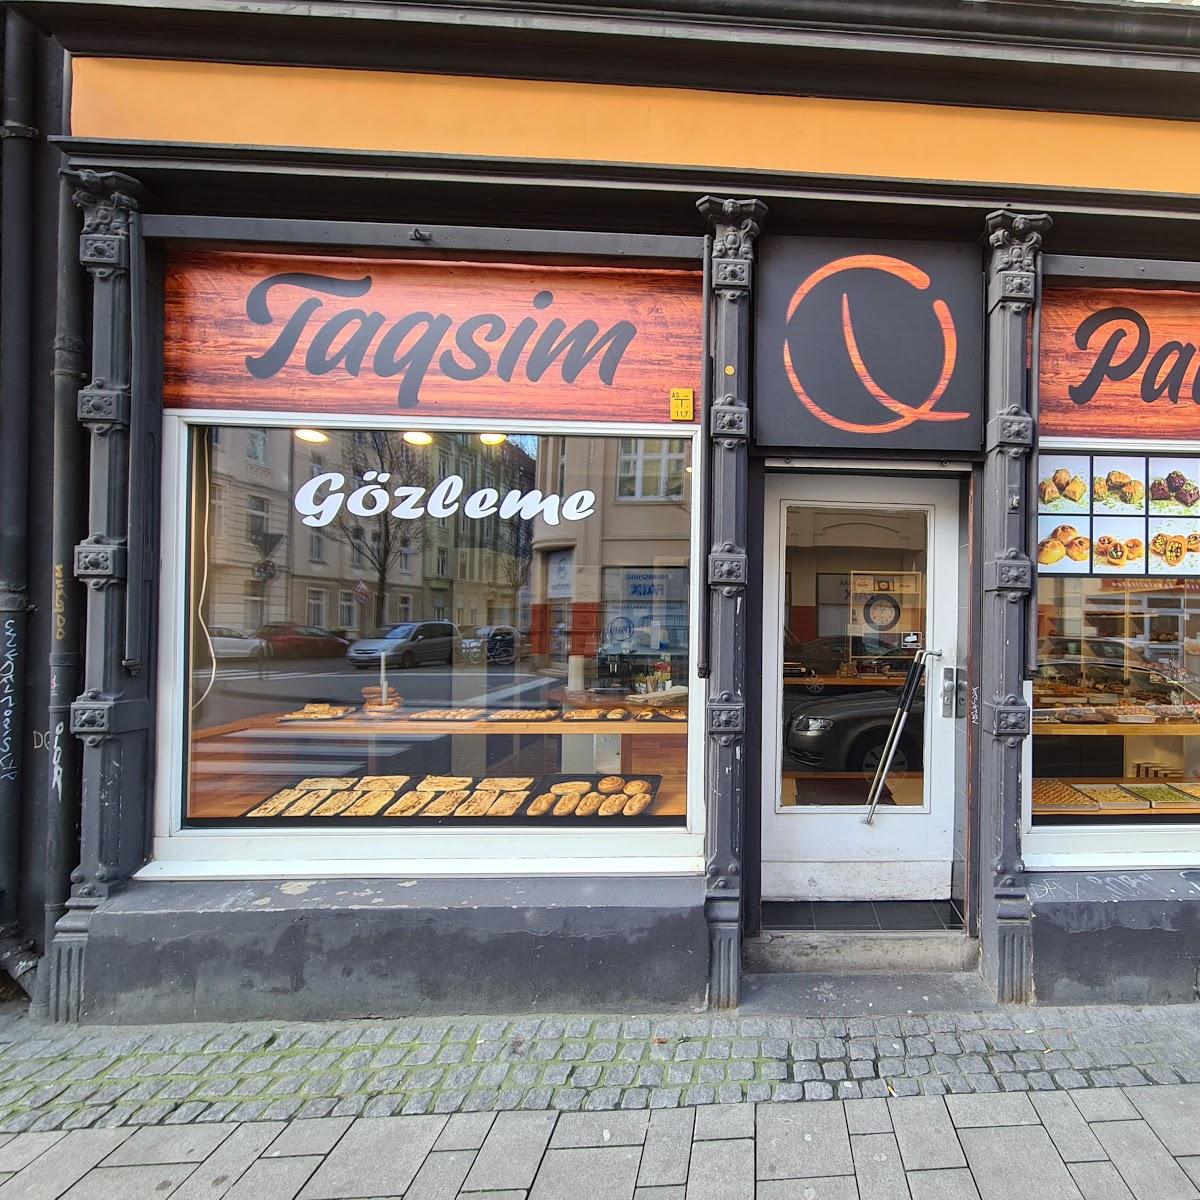 Restaurant "Taqsim Patisserie" in Köln